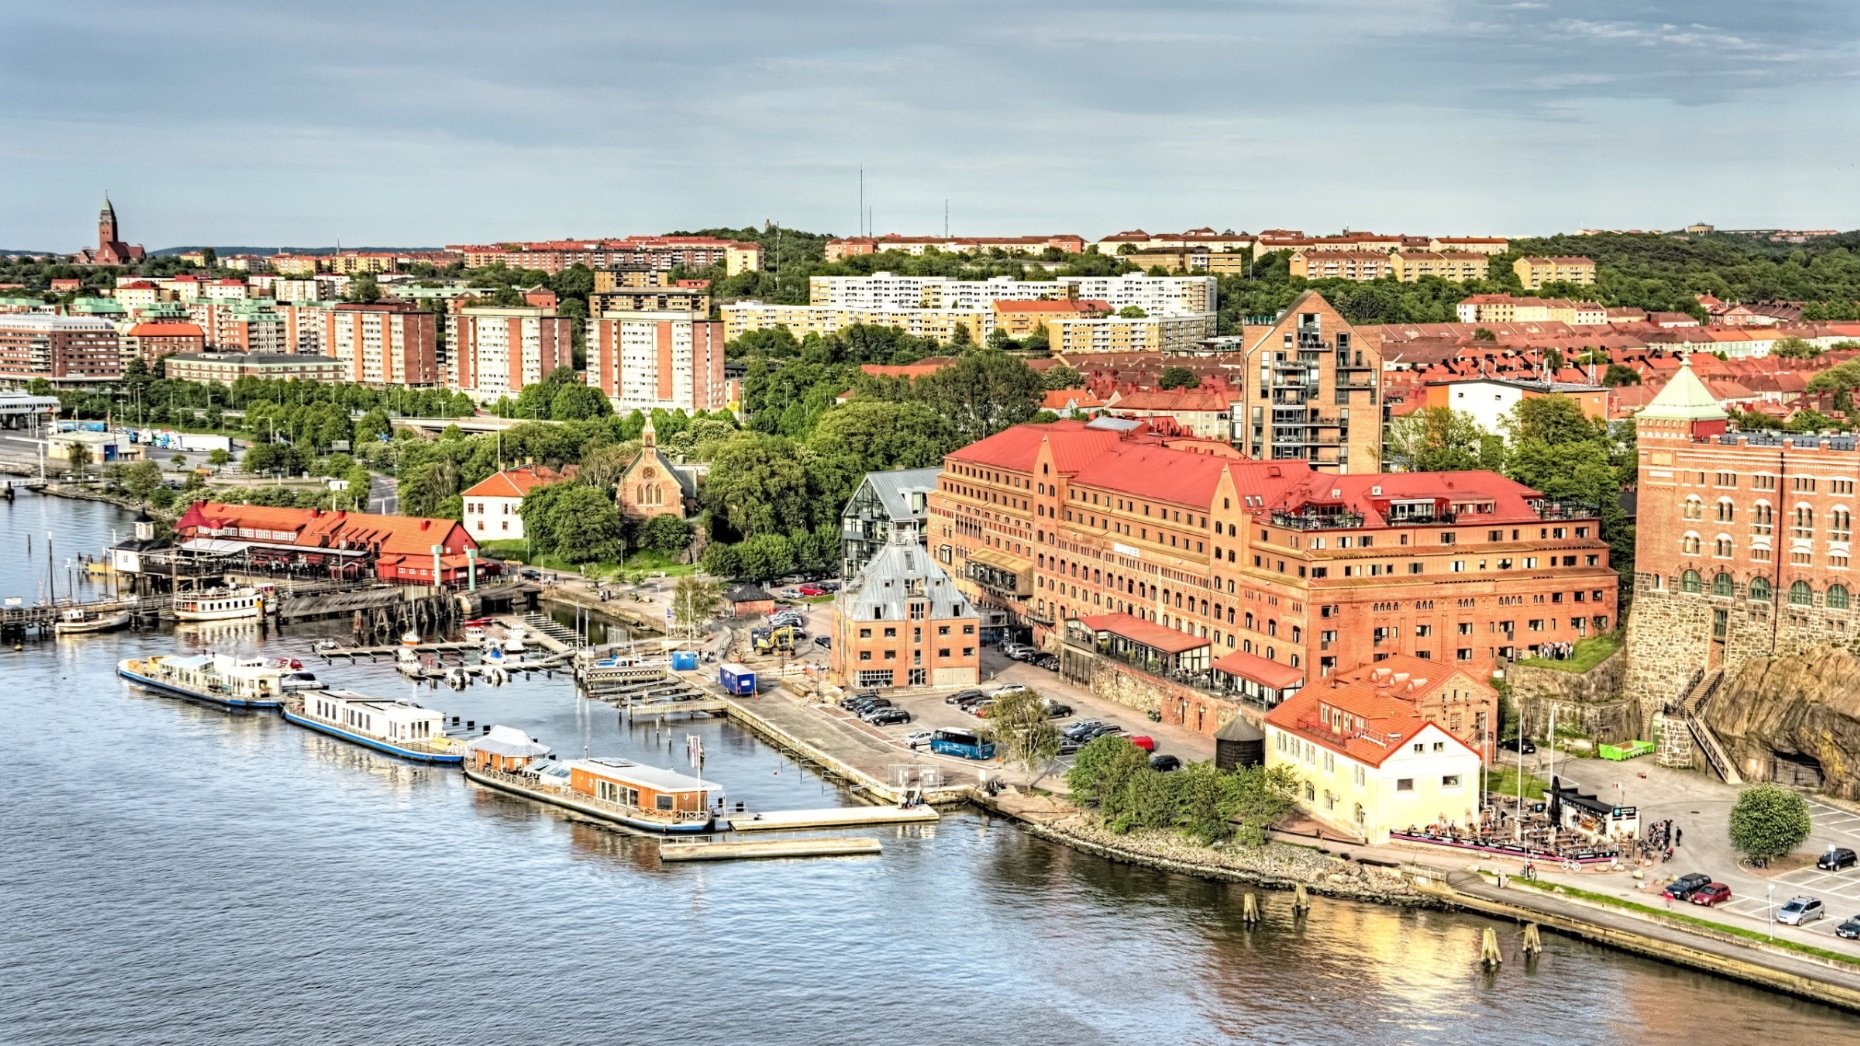 Urban landscape of Gothenburg, Sweden.